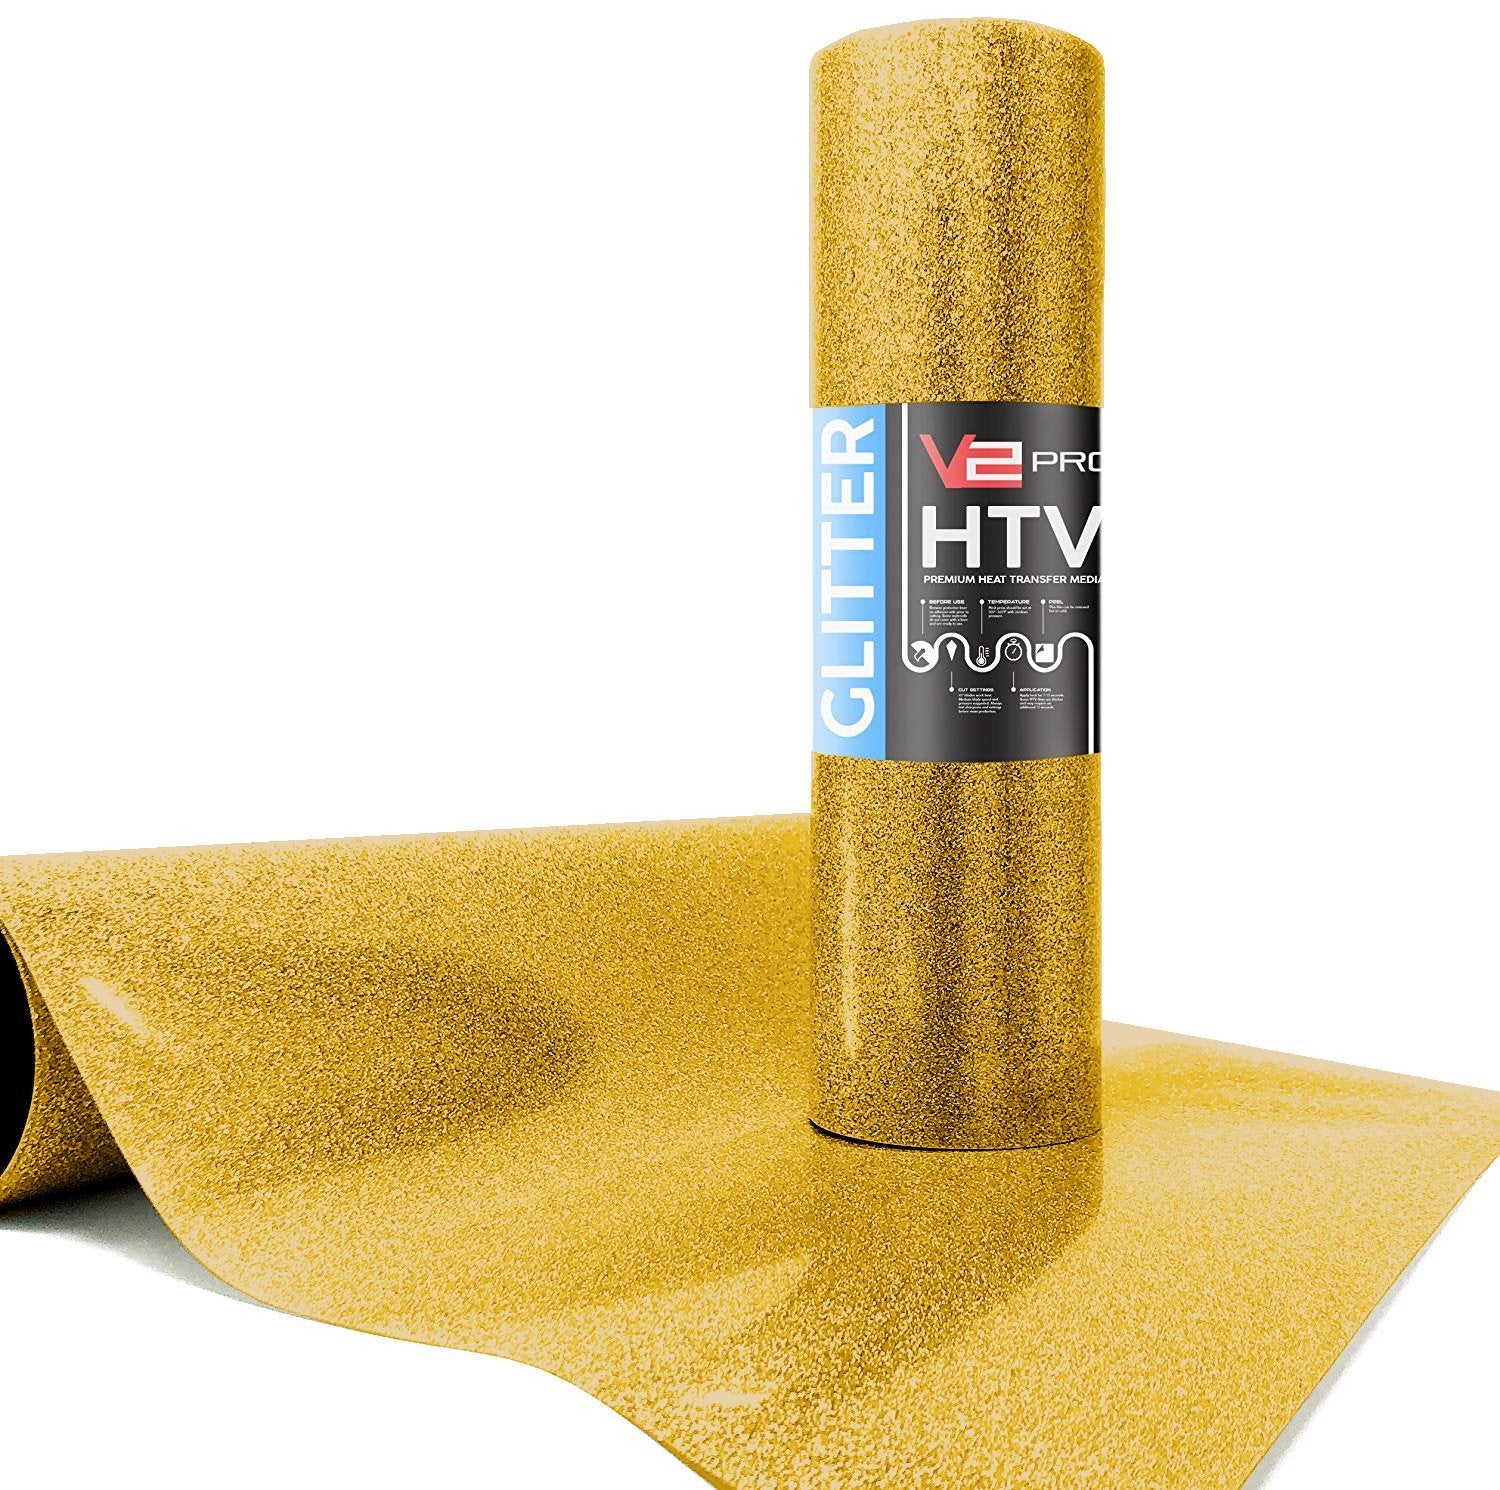 V2 Pro Hyper Gold Glitter Heat Transfer Film - The VViViD Vinyl Wrap Shop